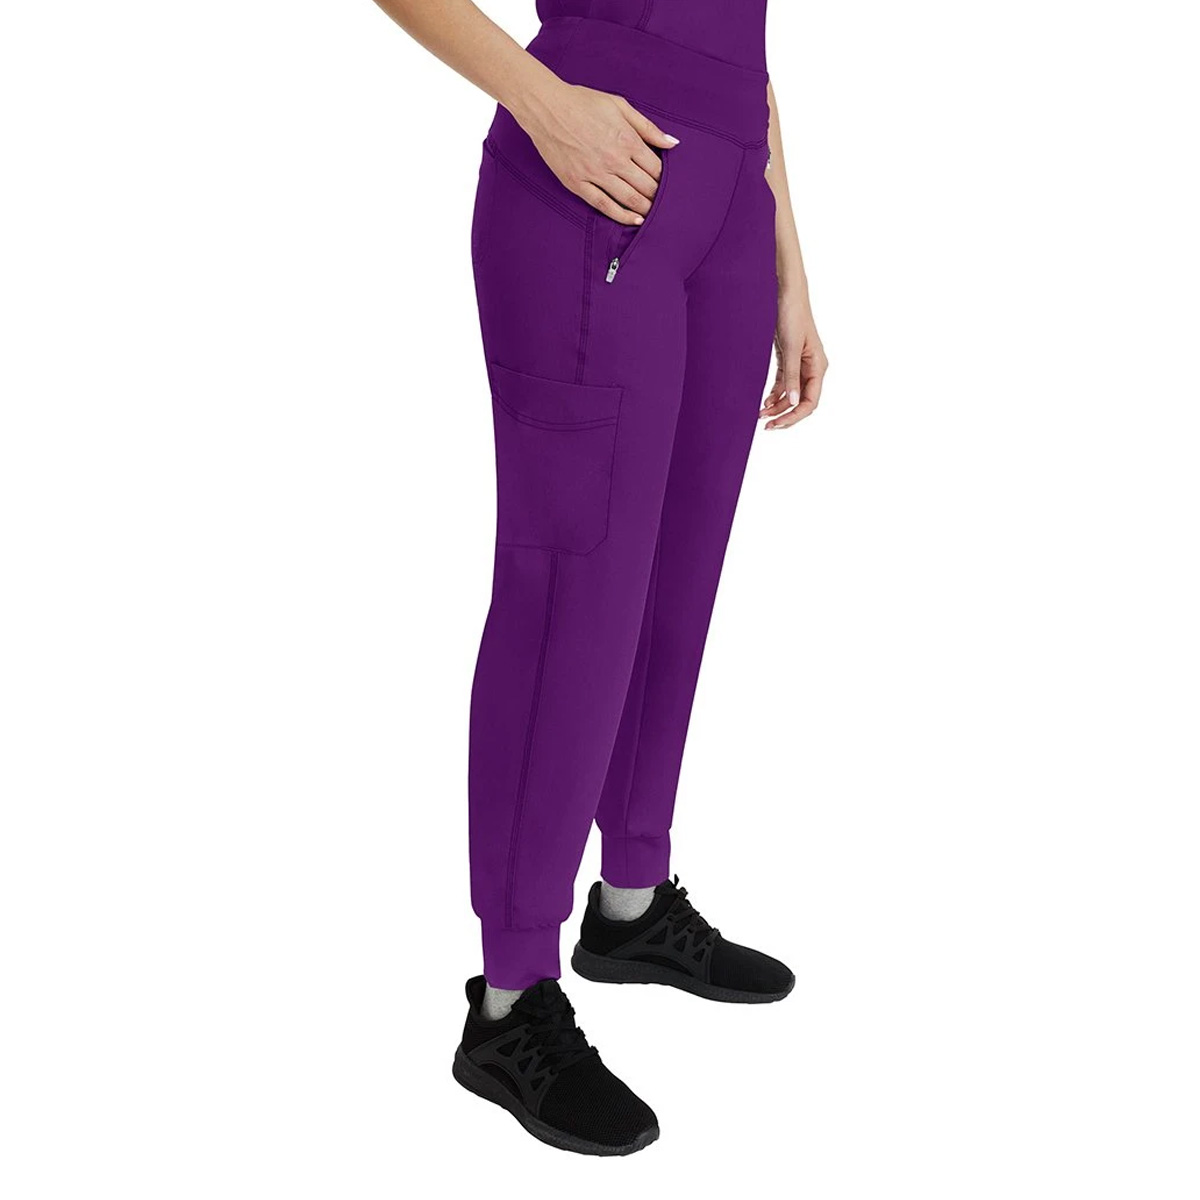 Healing Hands Purple Label Tori Yoga Pants (Regular Up to XL